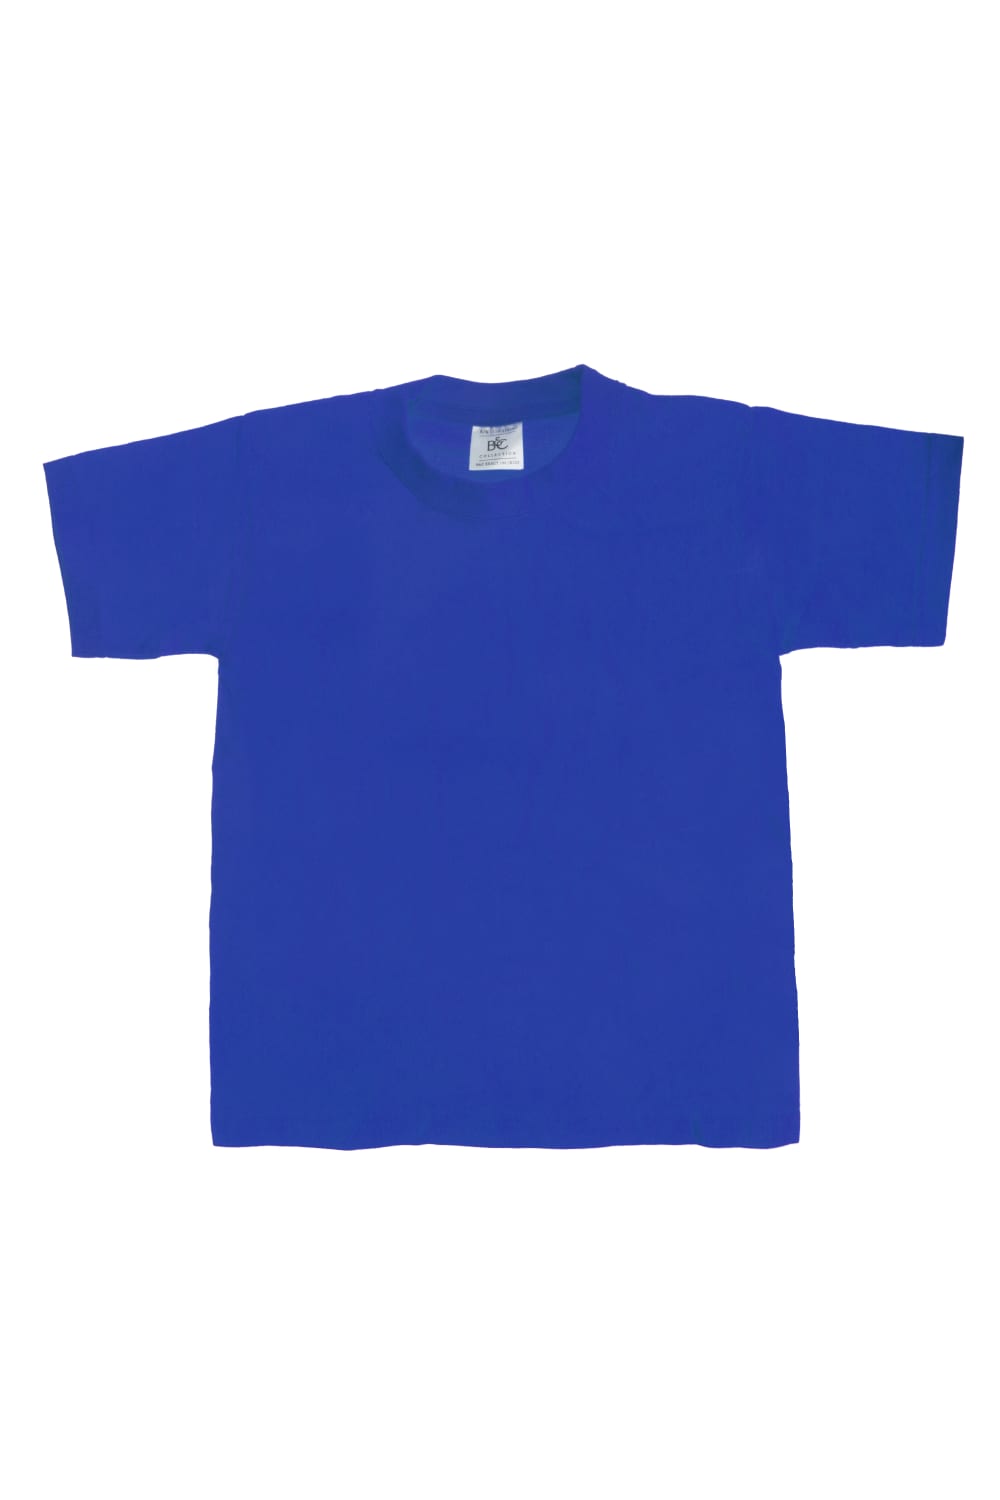 Big Boys Kids/Childrens Exact 190 Short Sleeved T-Shirt (Pack Of 2) - Royal